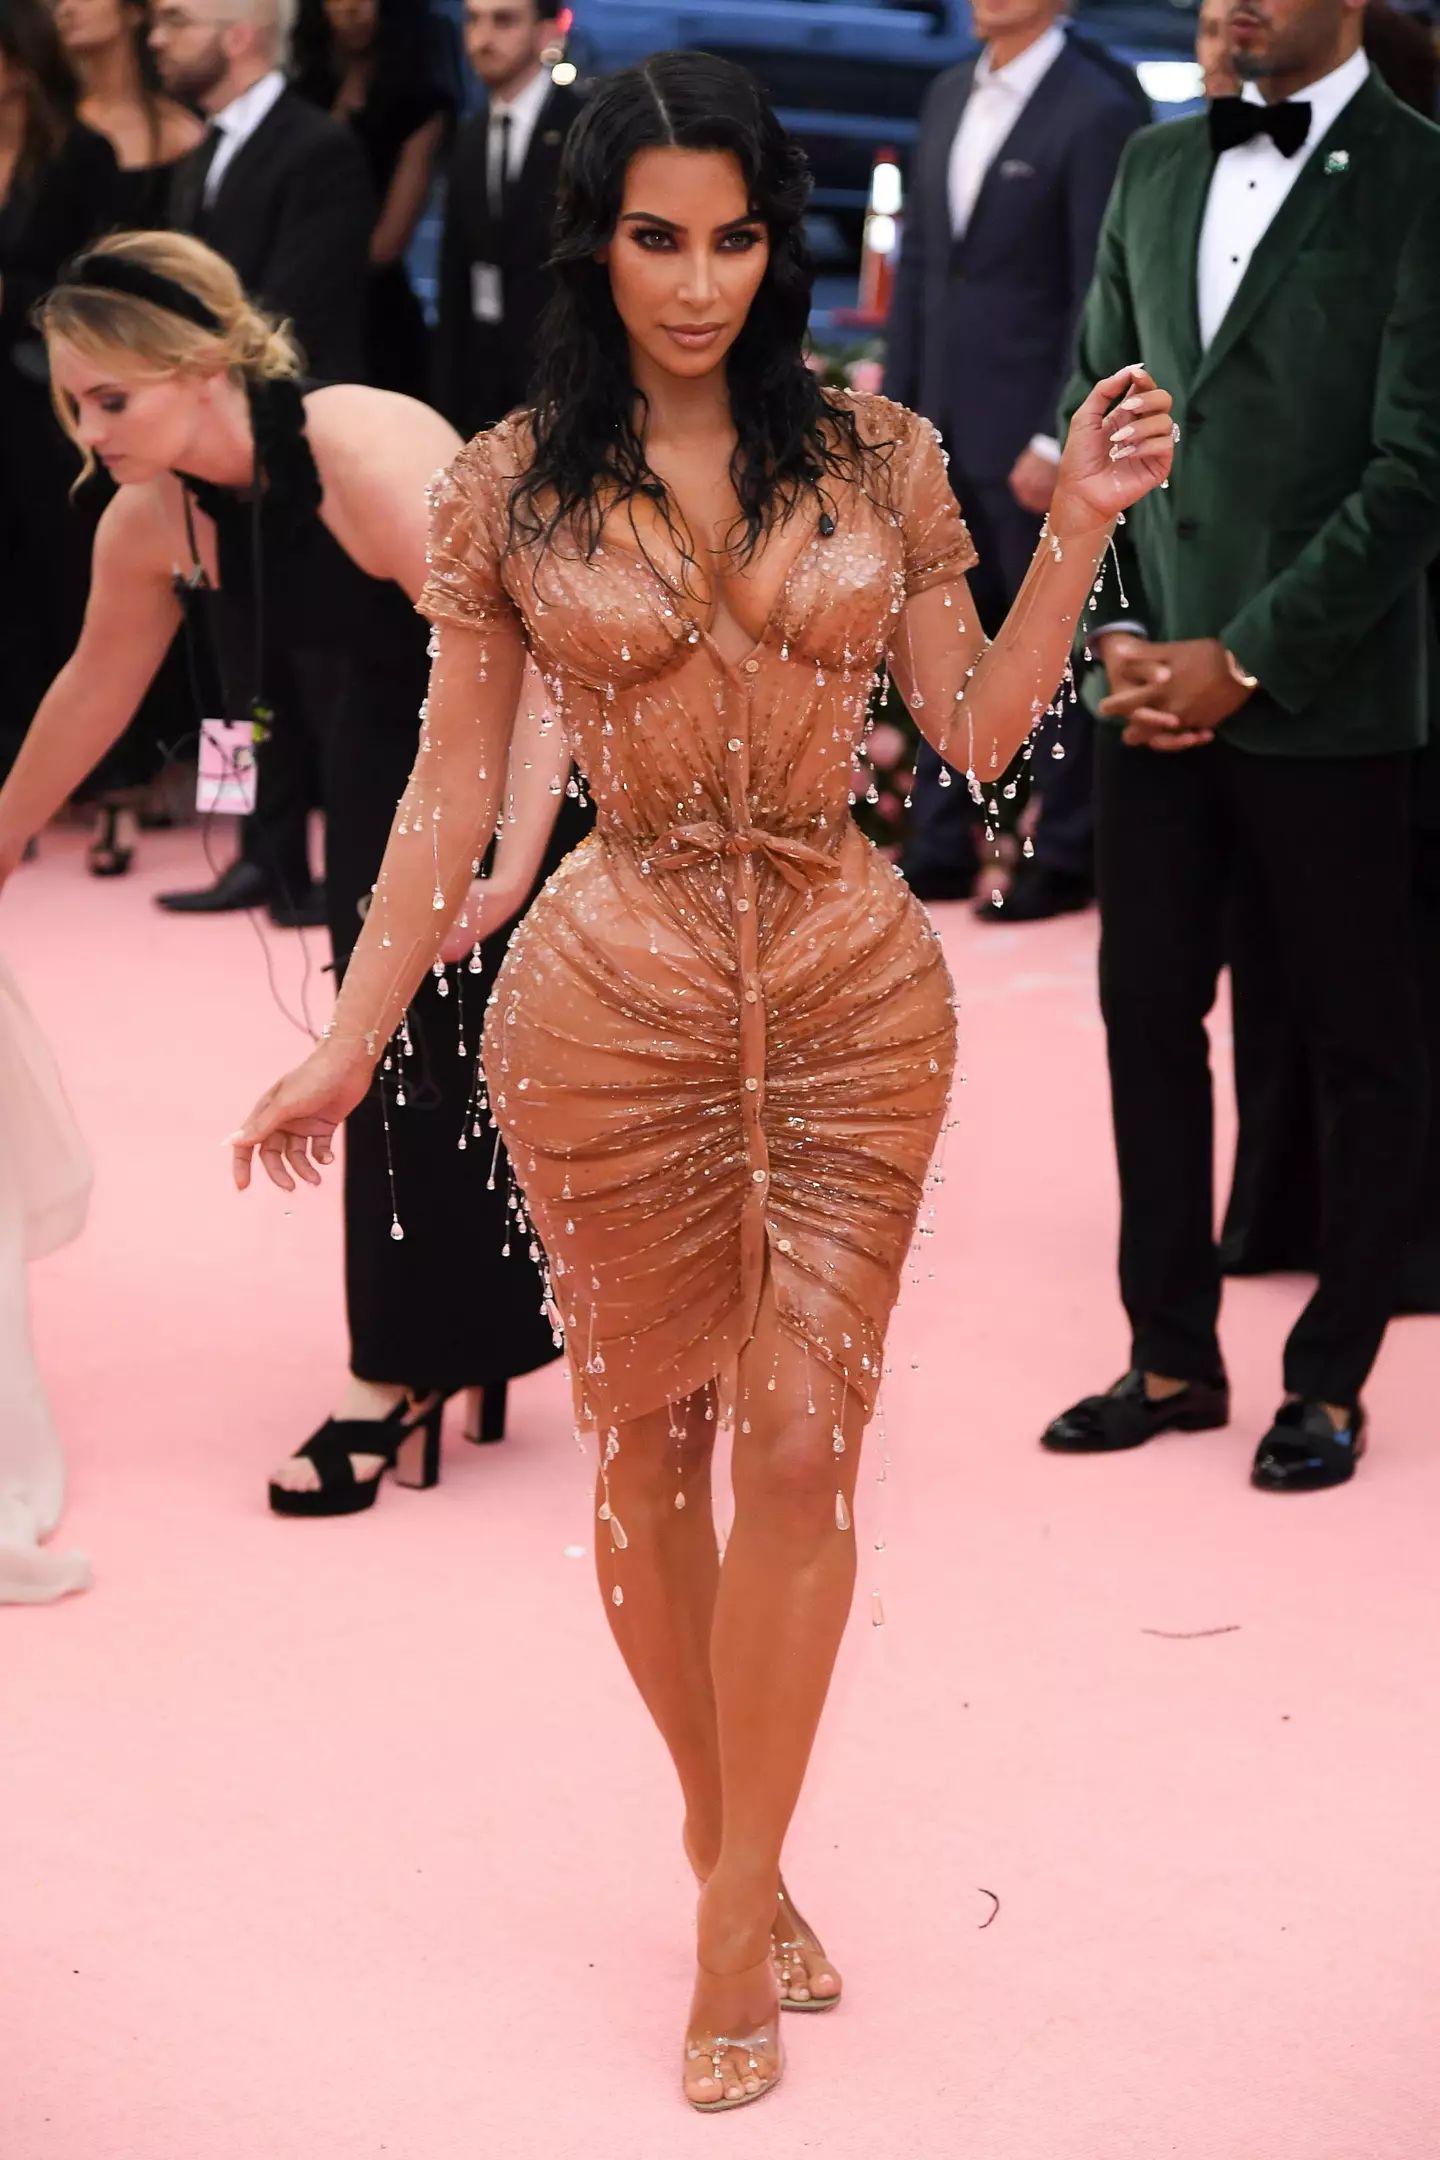 Kim's 2019 Met Gala dress (